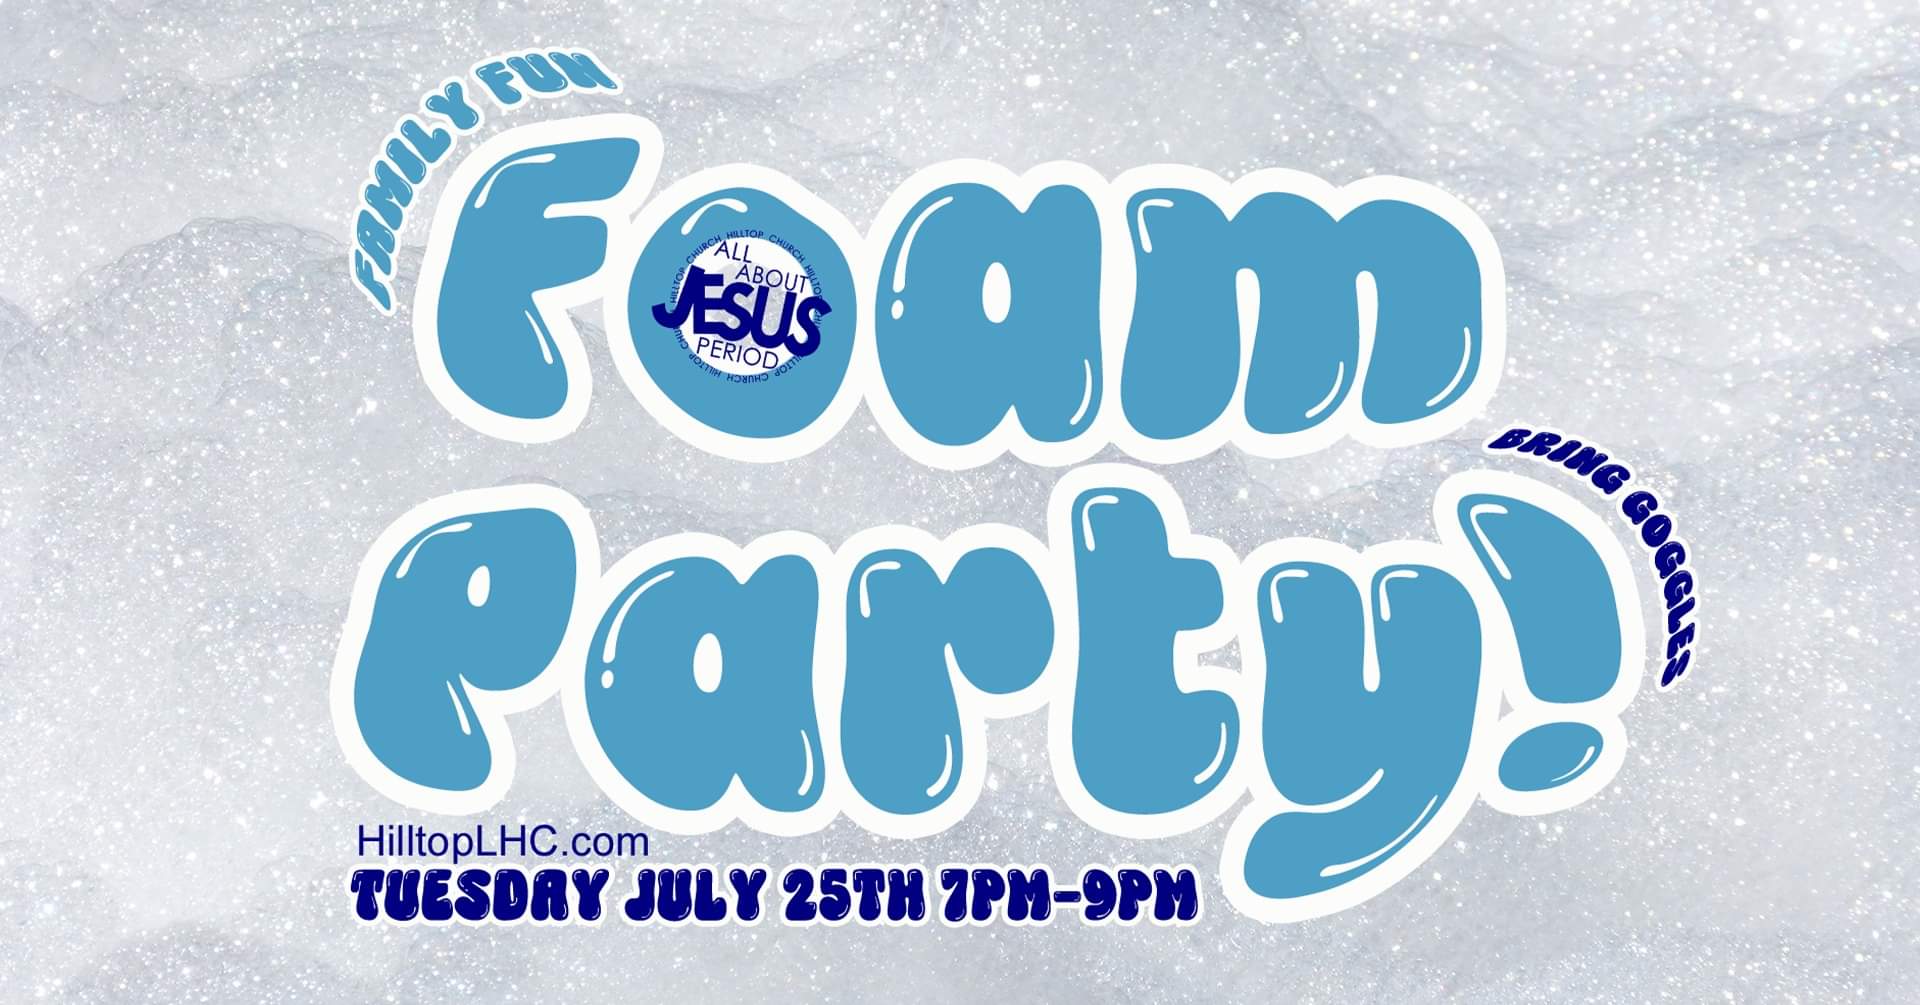 Hilltop Church Family Fun Foam Party